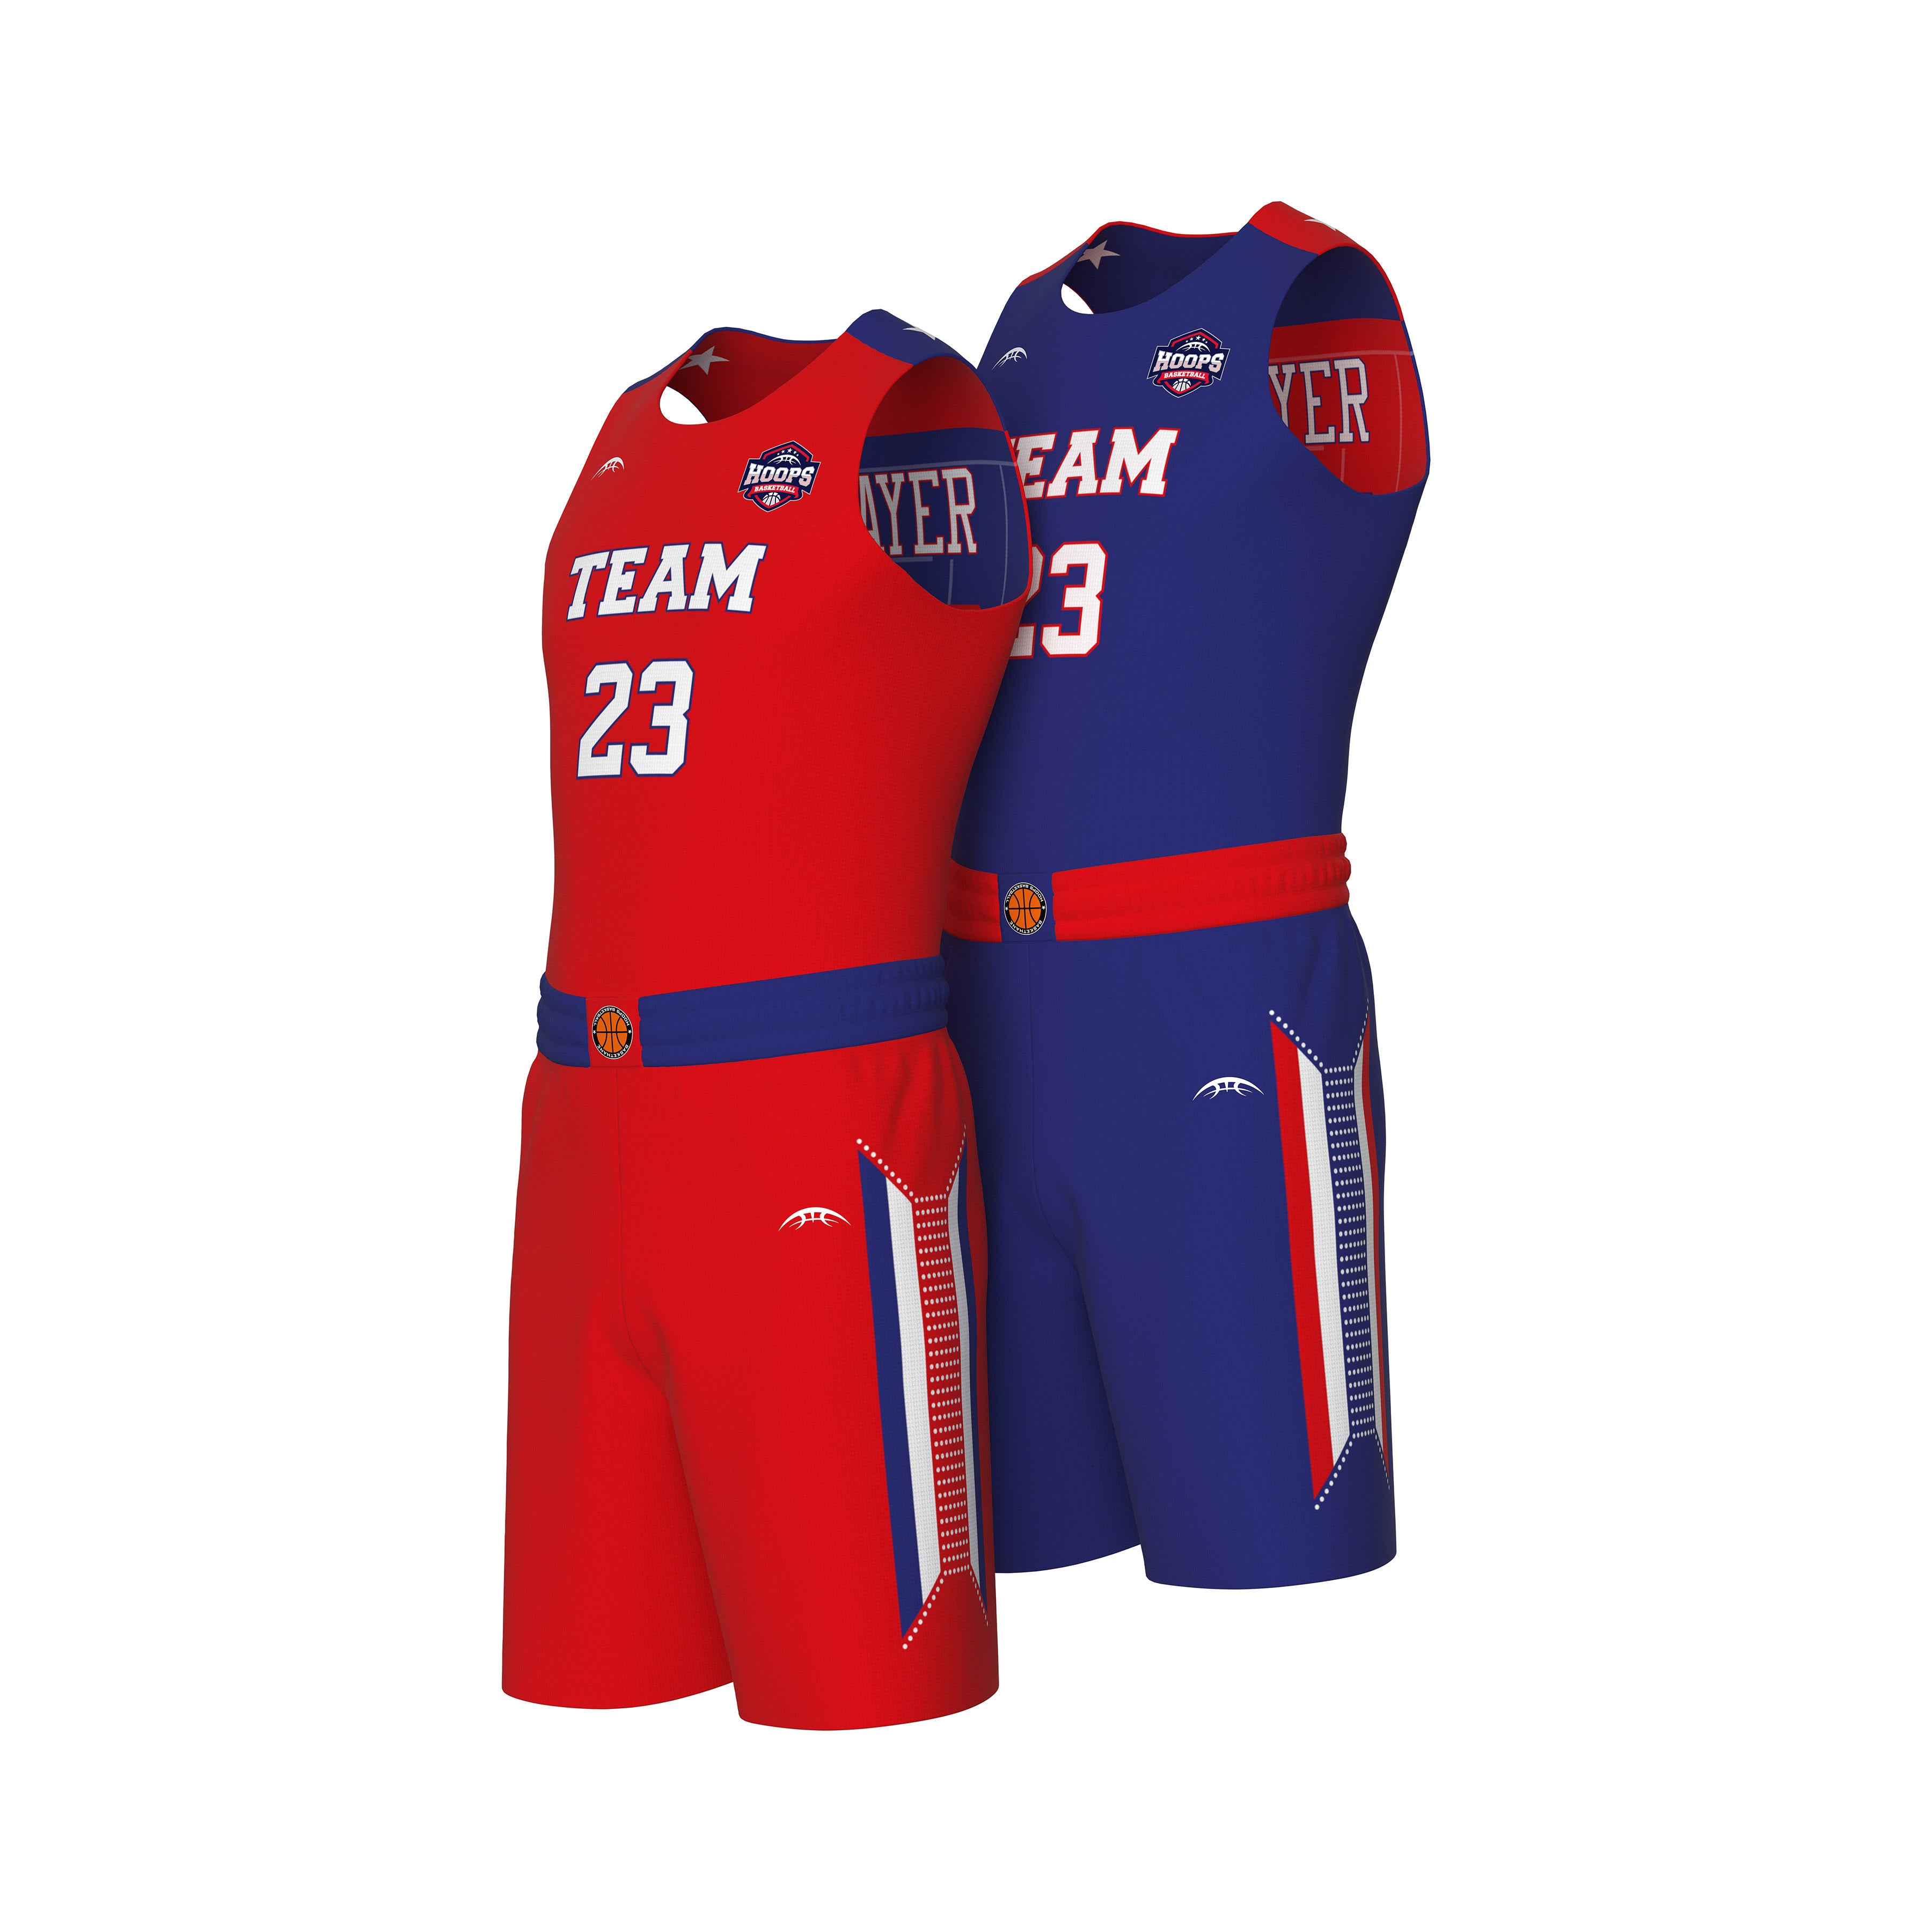 Customizable Best Basketball Jerseys Uniforms: On Sale